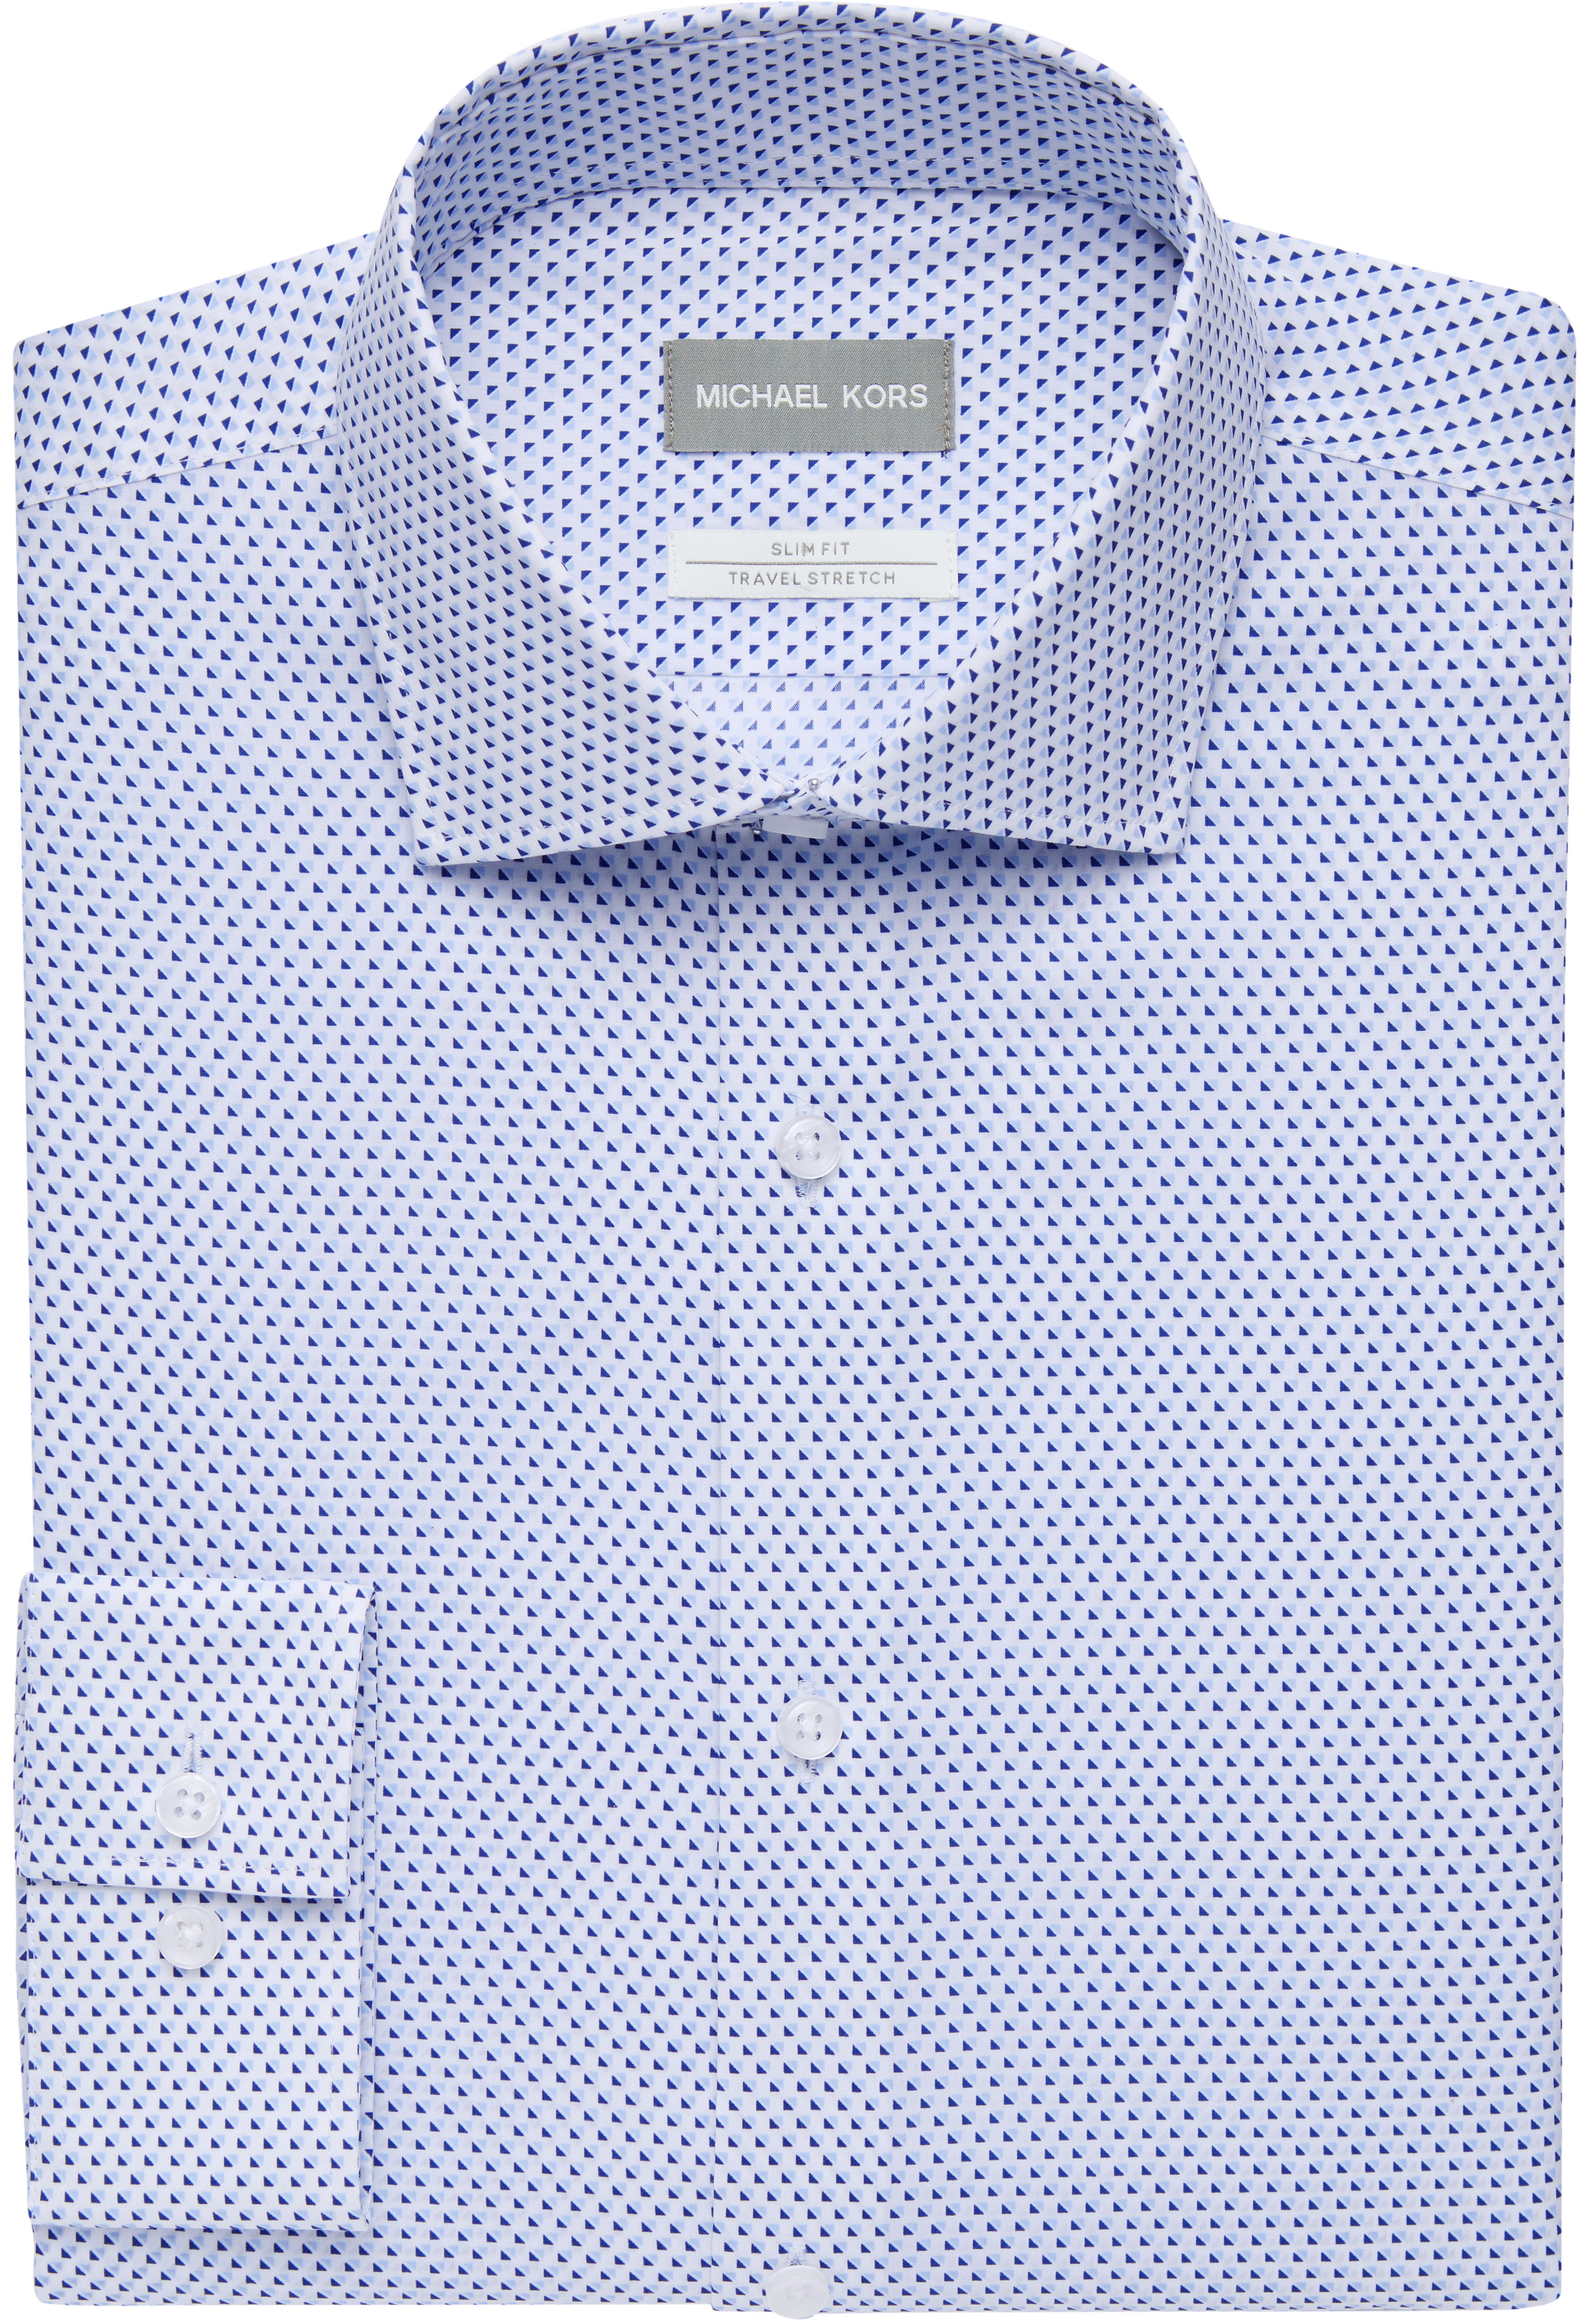 Michael Kors 38/39 Shirts | Men's